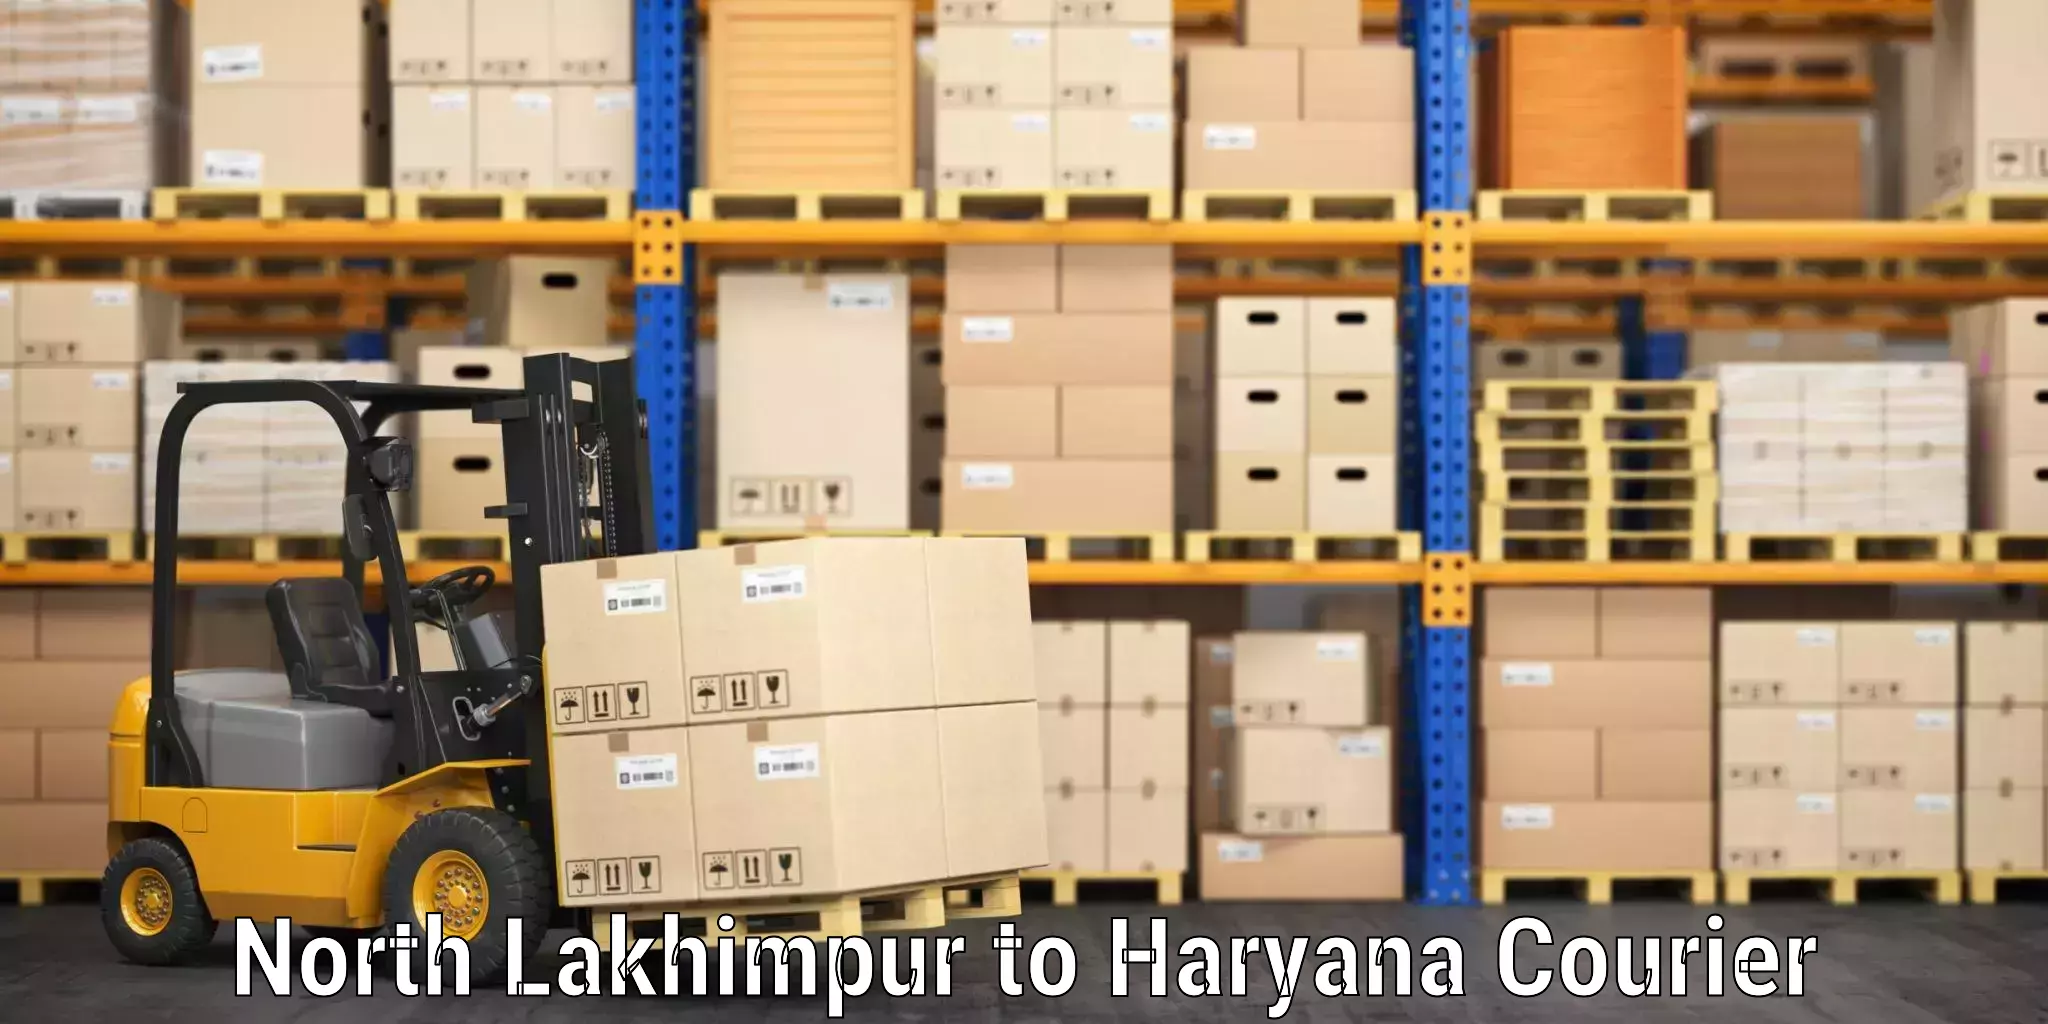 Luggage shipment tracking in North Lakhimpur to Haryana